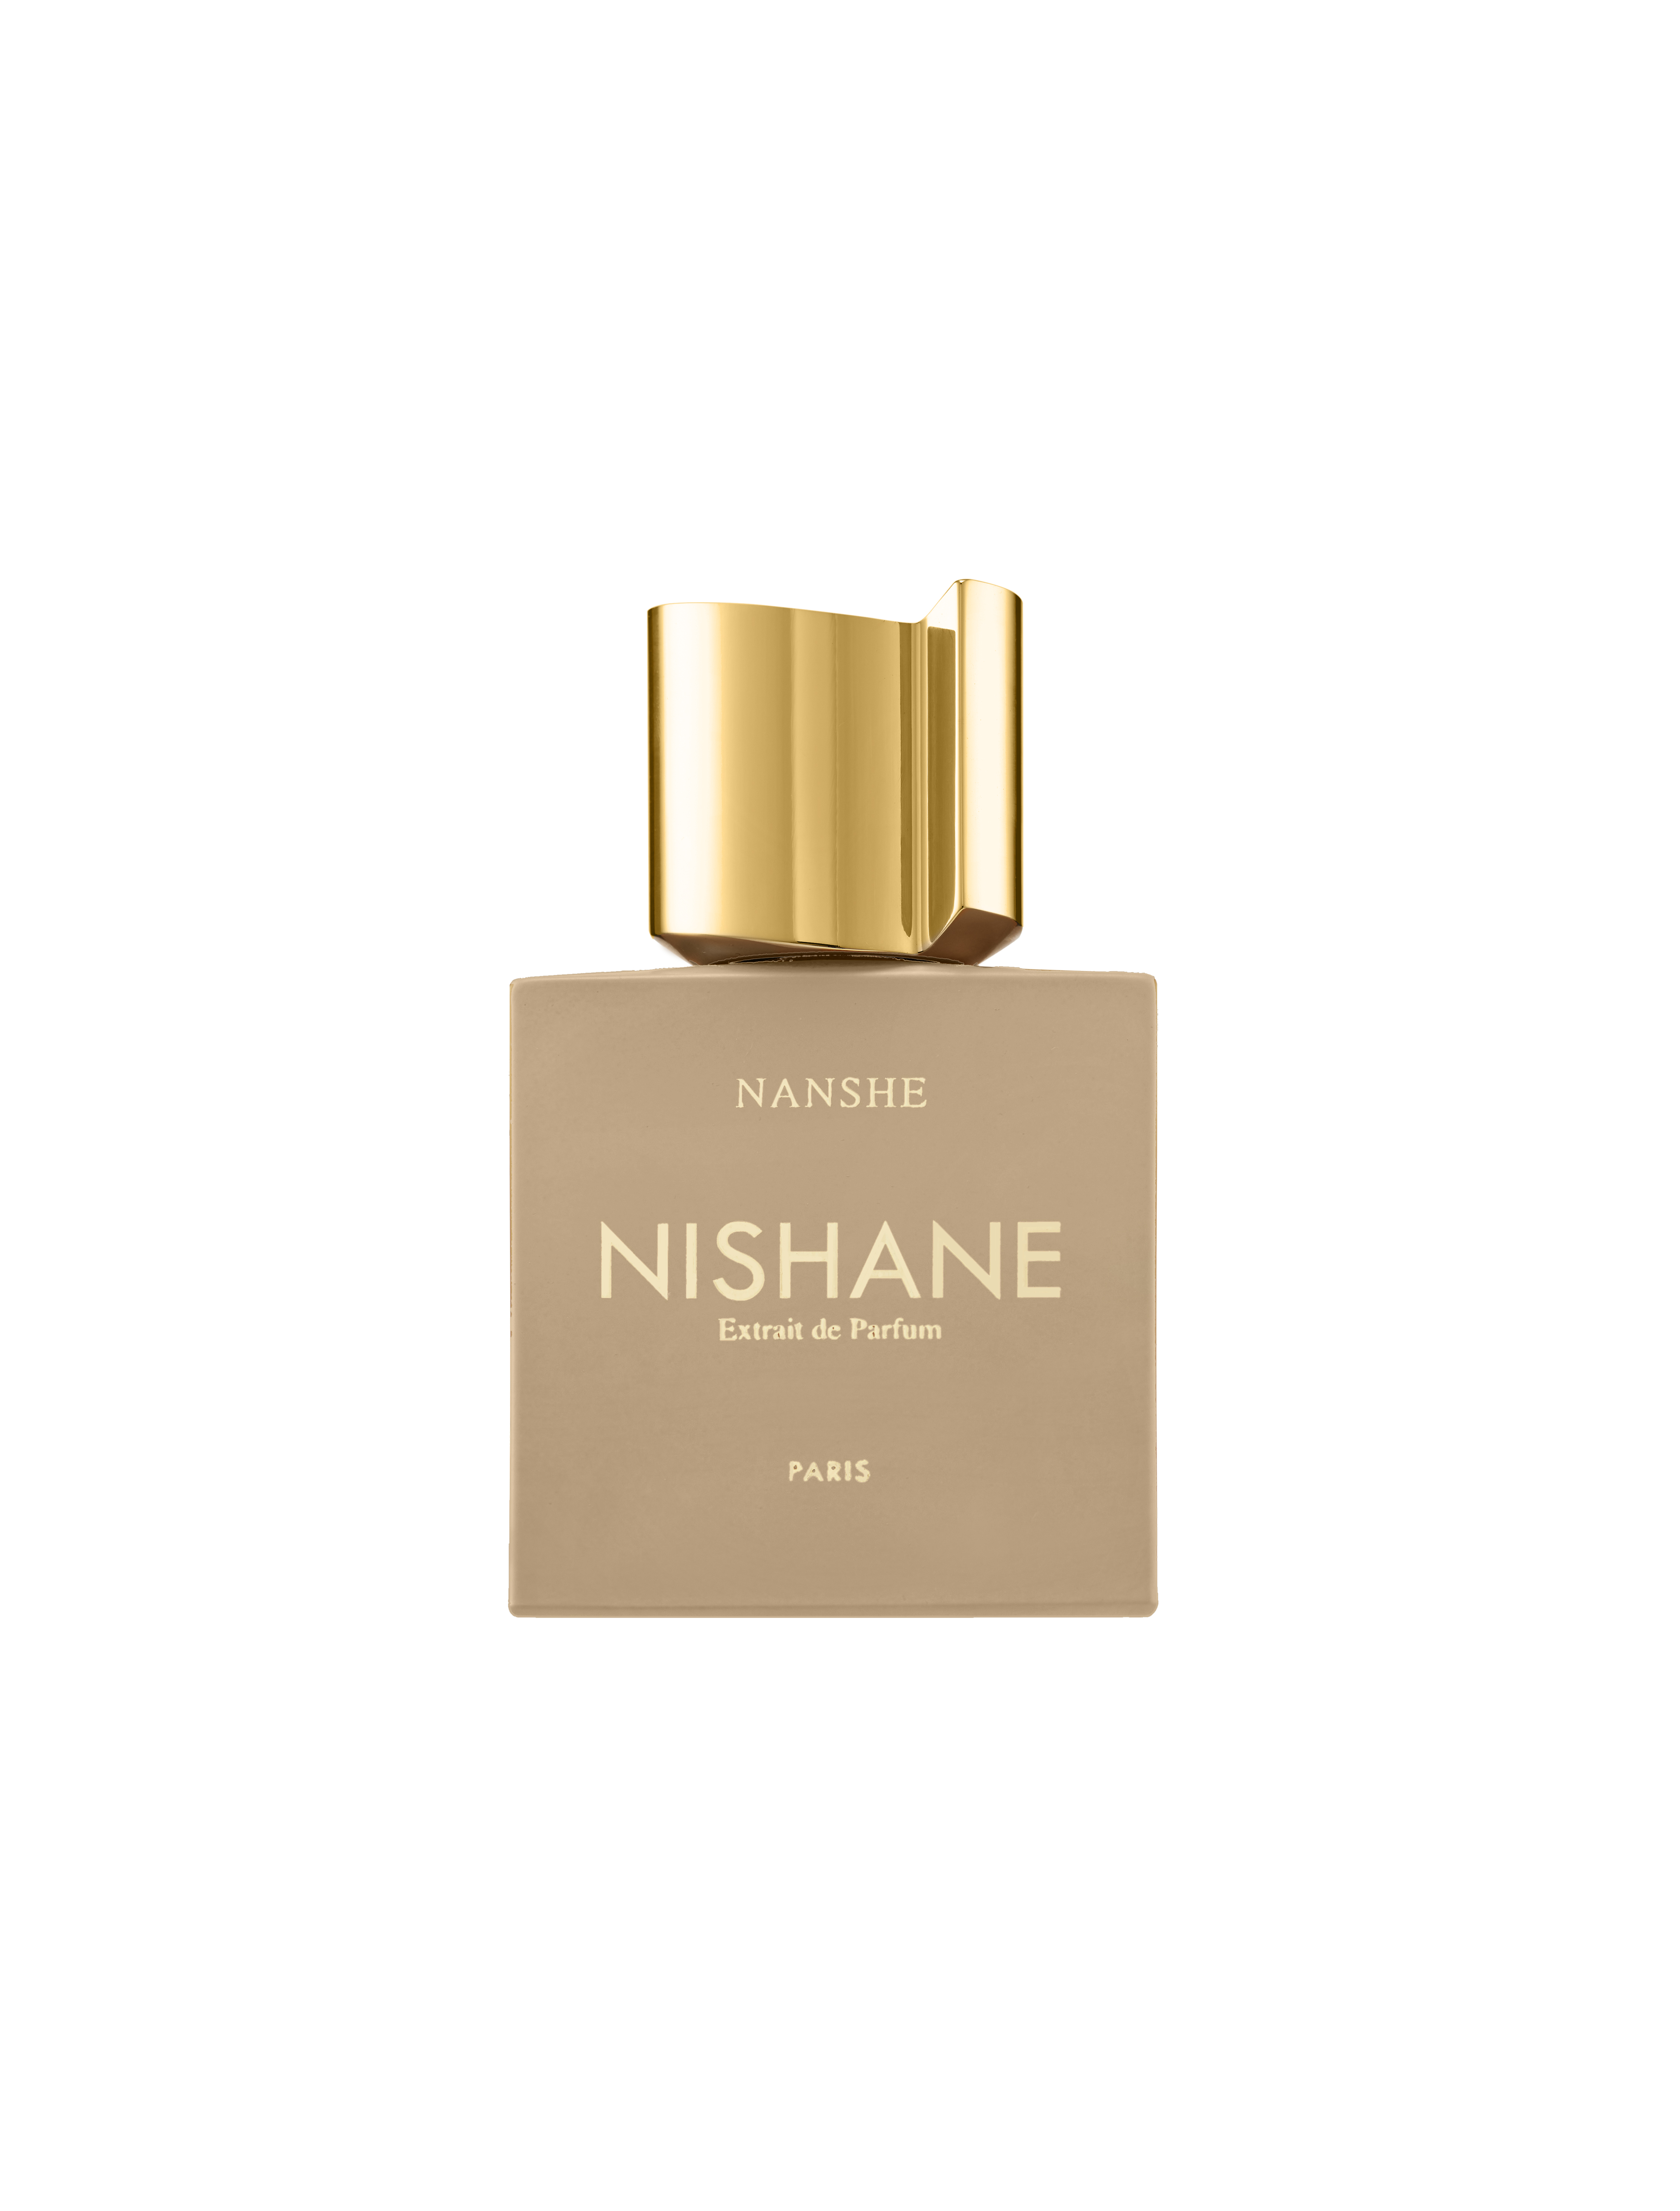 Nishane - Nanshe - Extrait de Parfum 50 ml